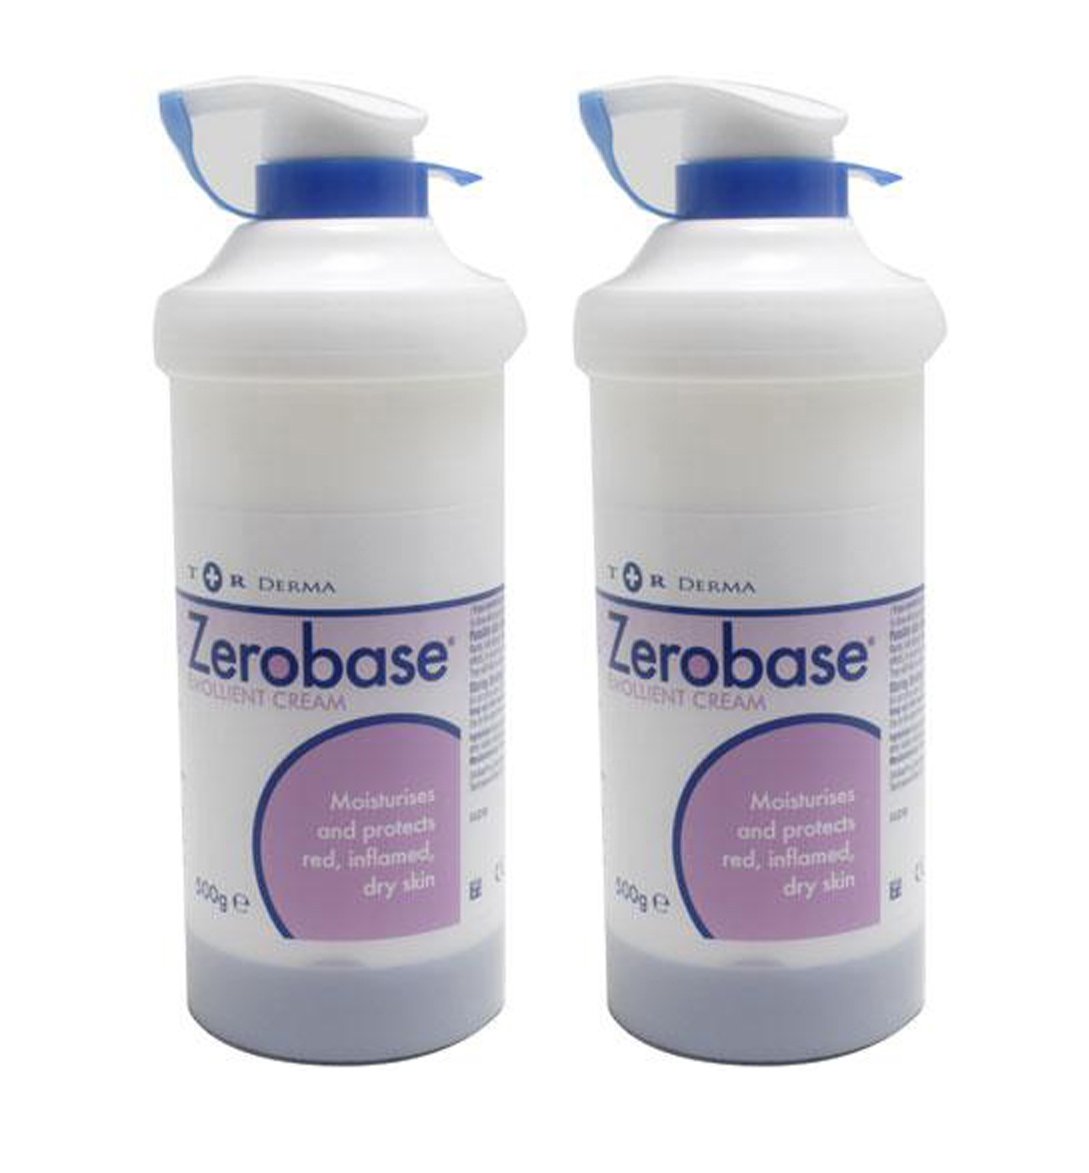 Zerobase Emollient Cream 500g - Pack of 2